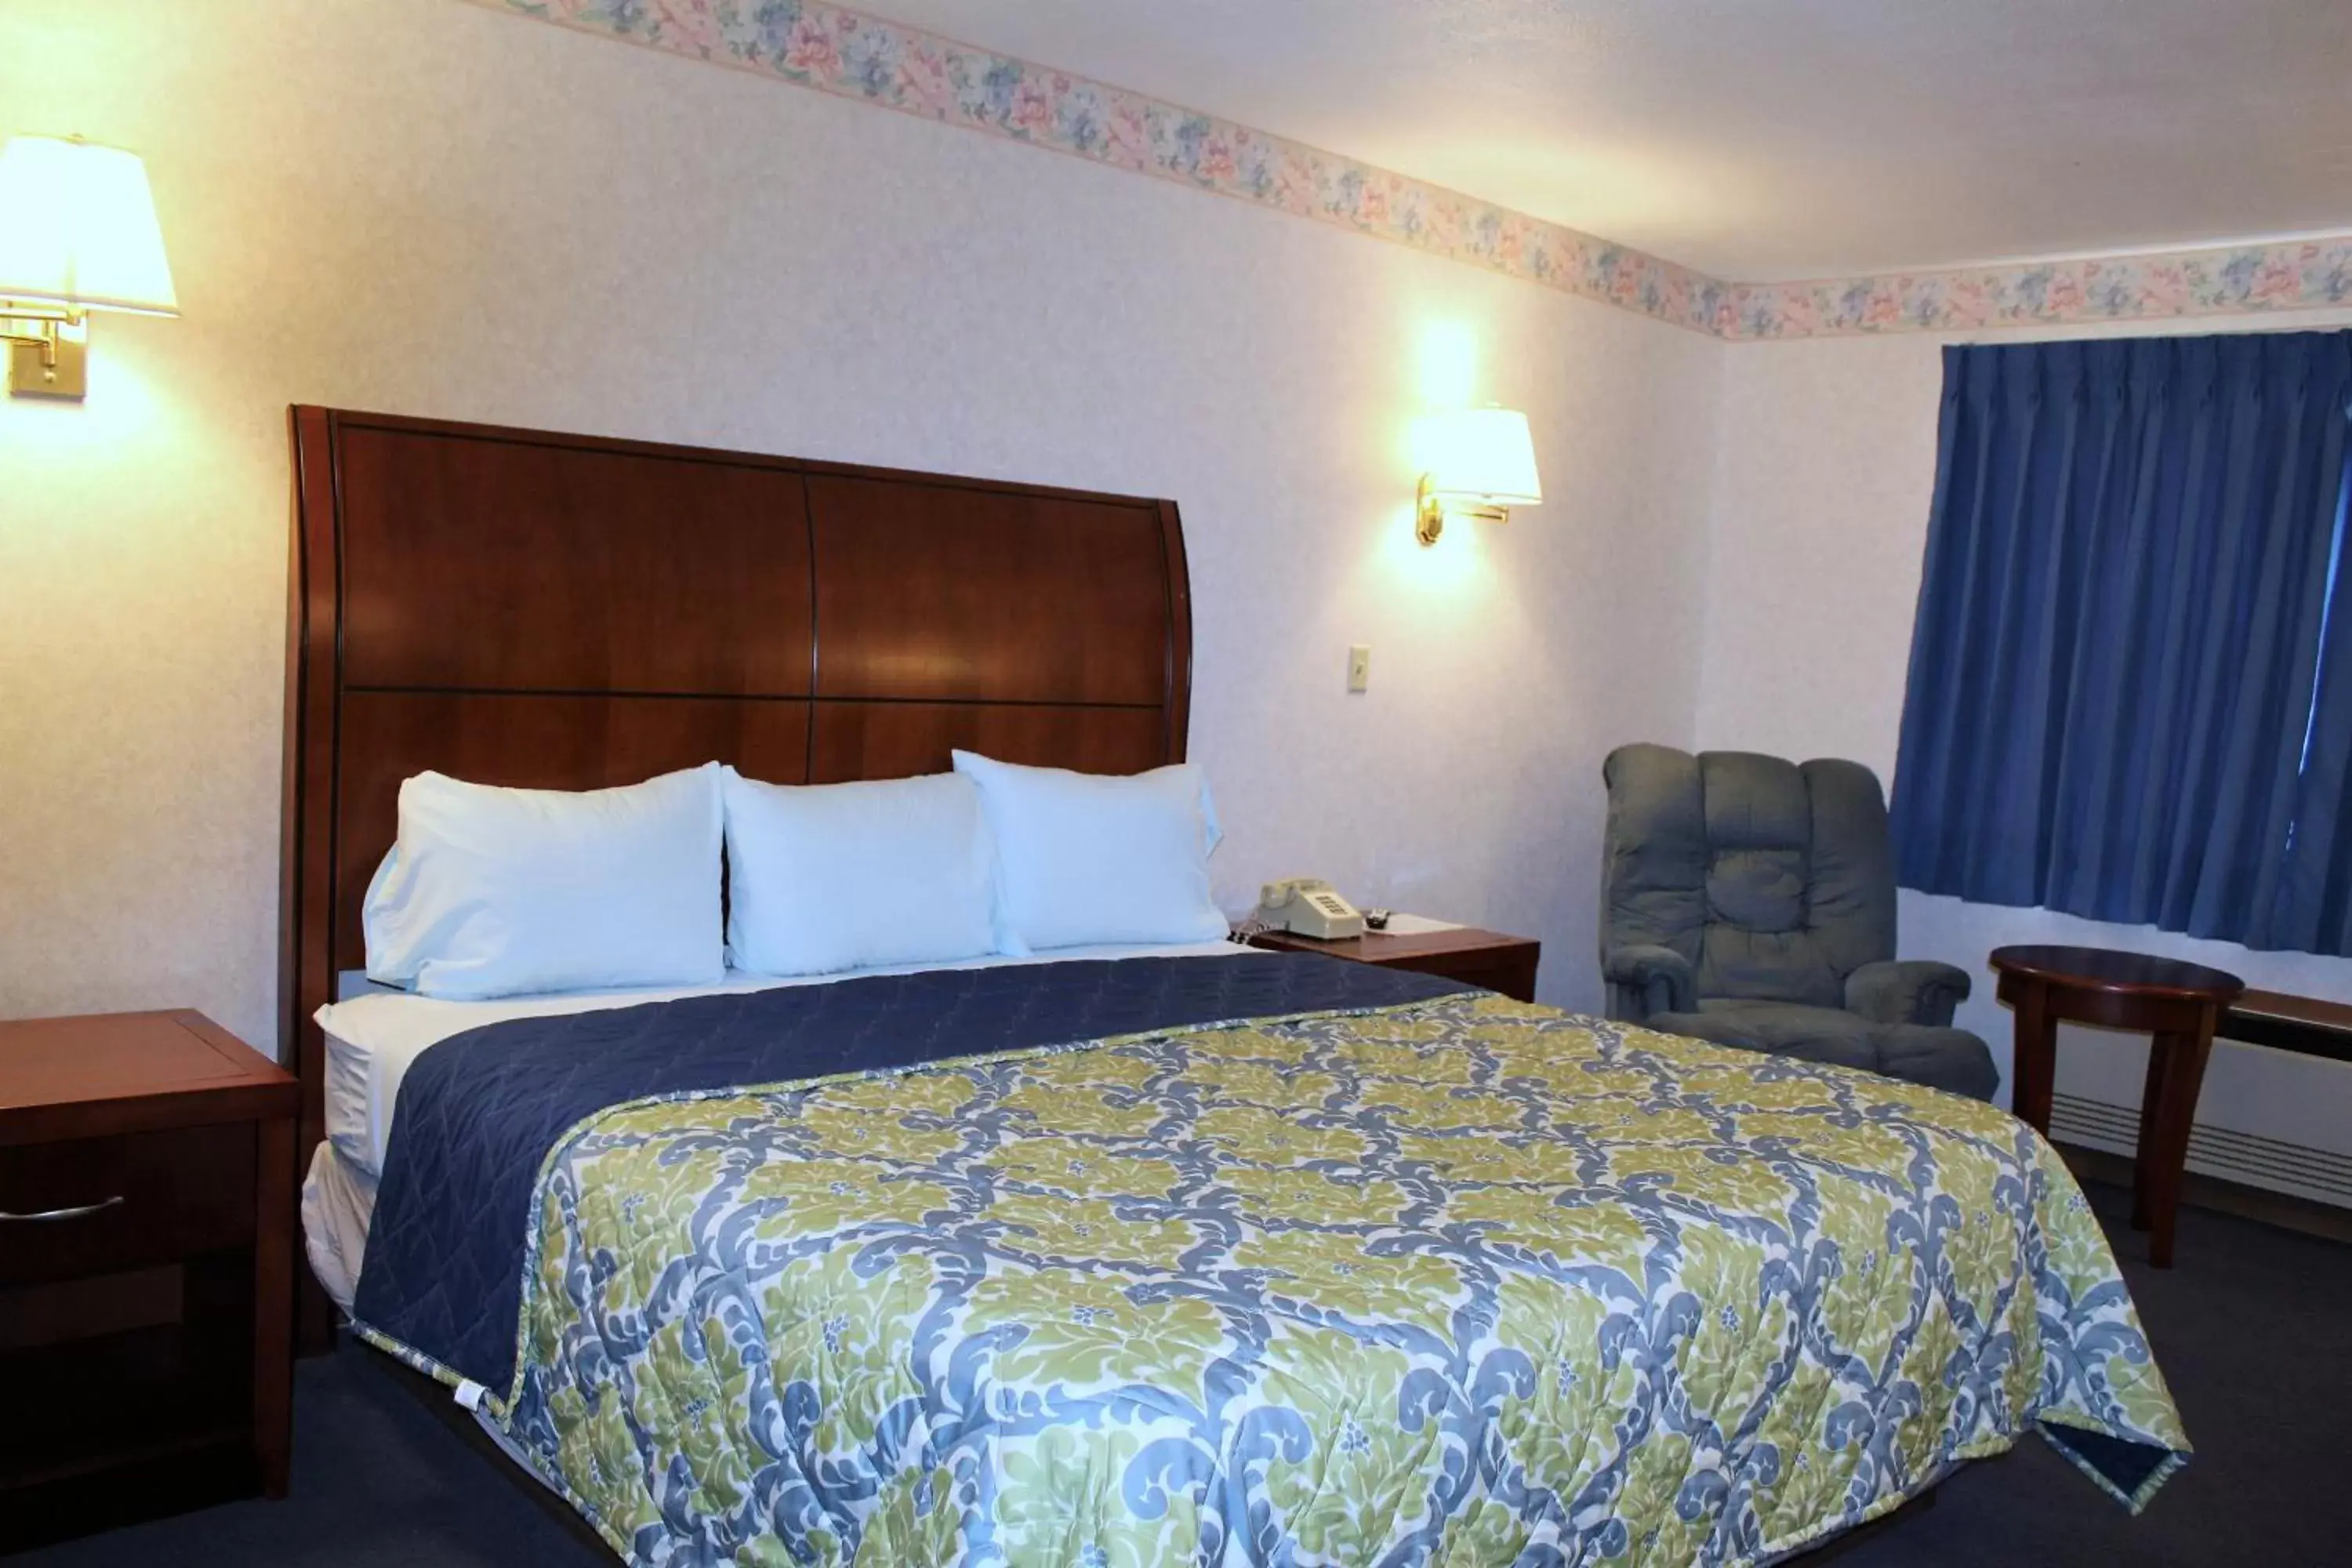 Decorative detail, Bed in Americas Best Value Inn Decatur, IN